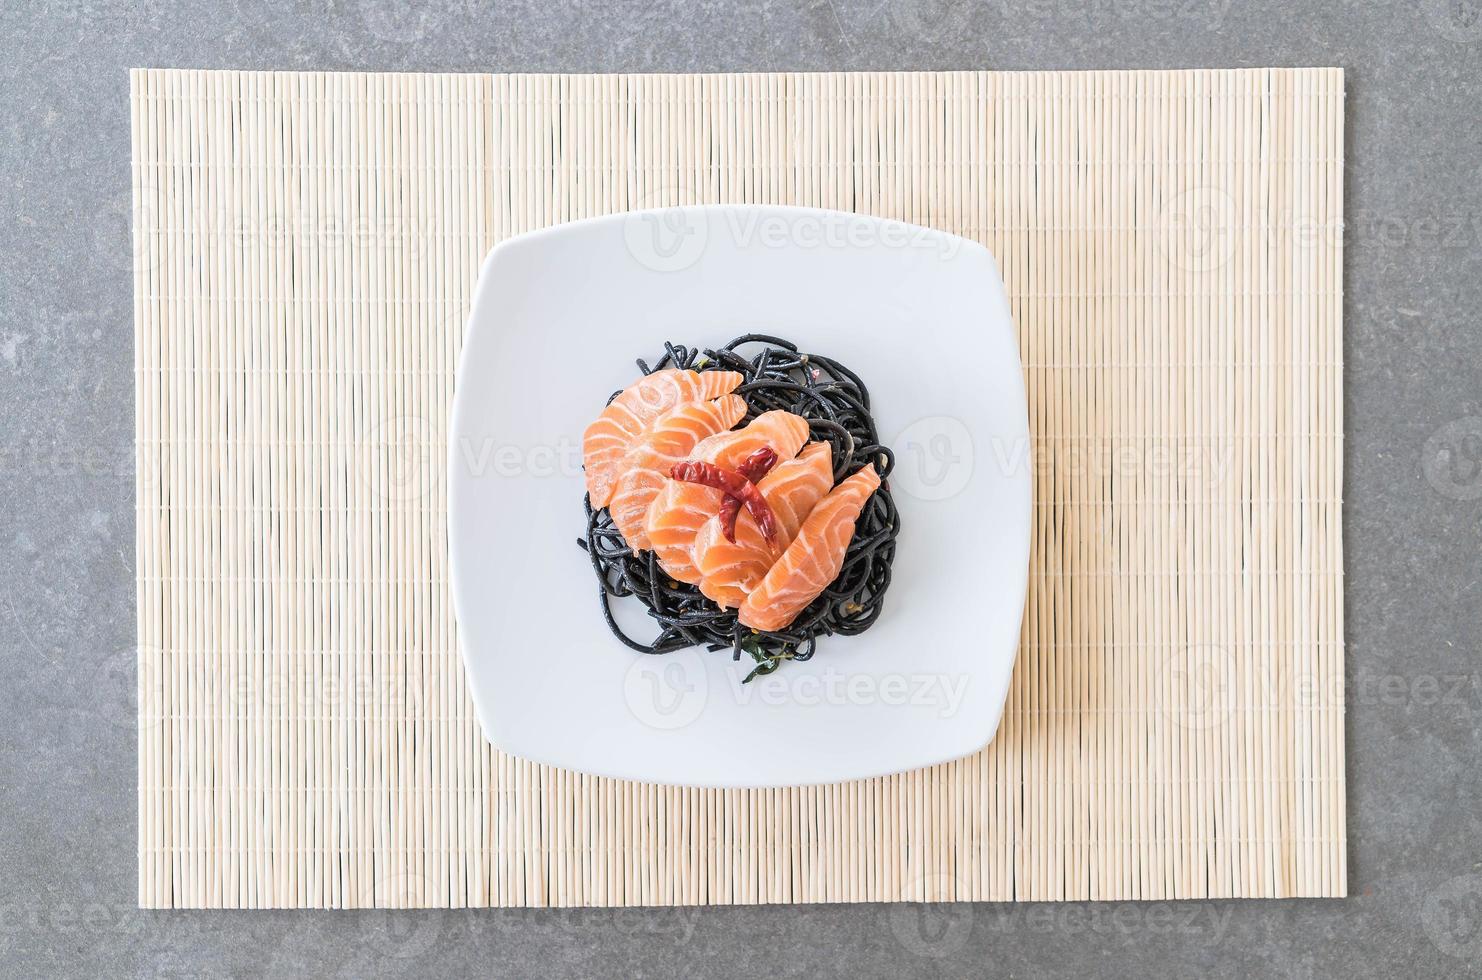 Spicy black spaghetti with salmon - fusion food style photo